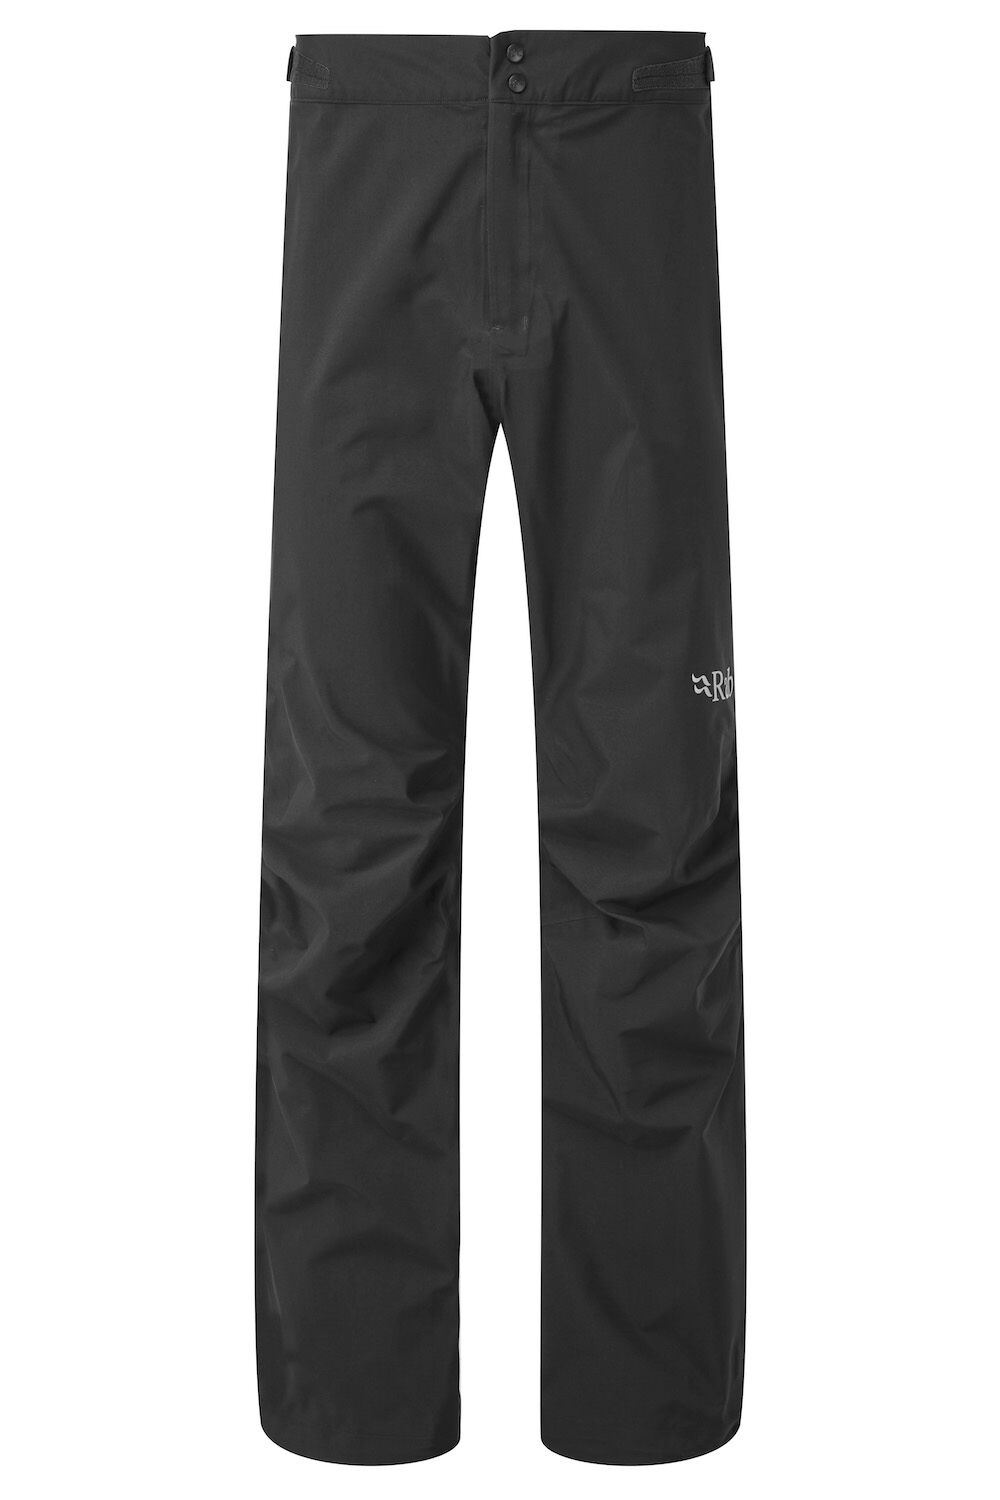 Rab Kangri GTX Pants - Hardshell pants - Men's